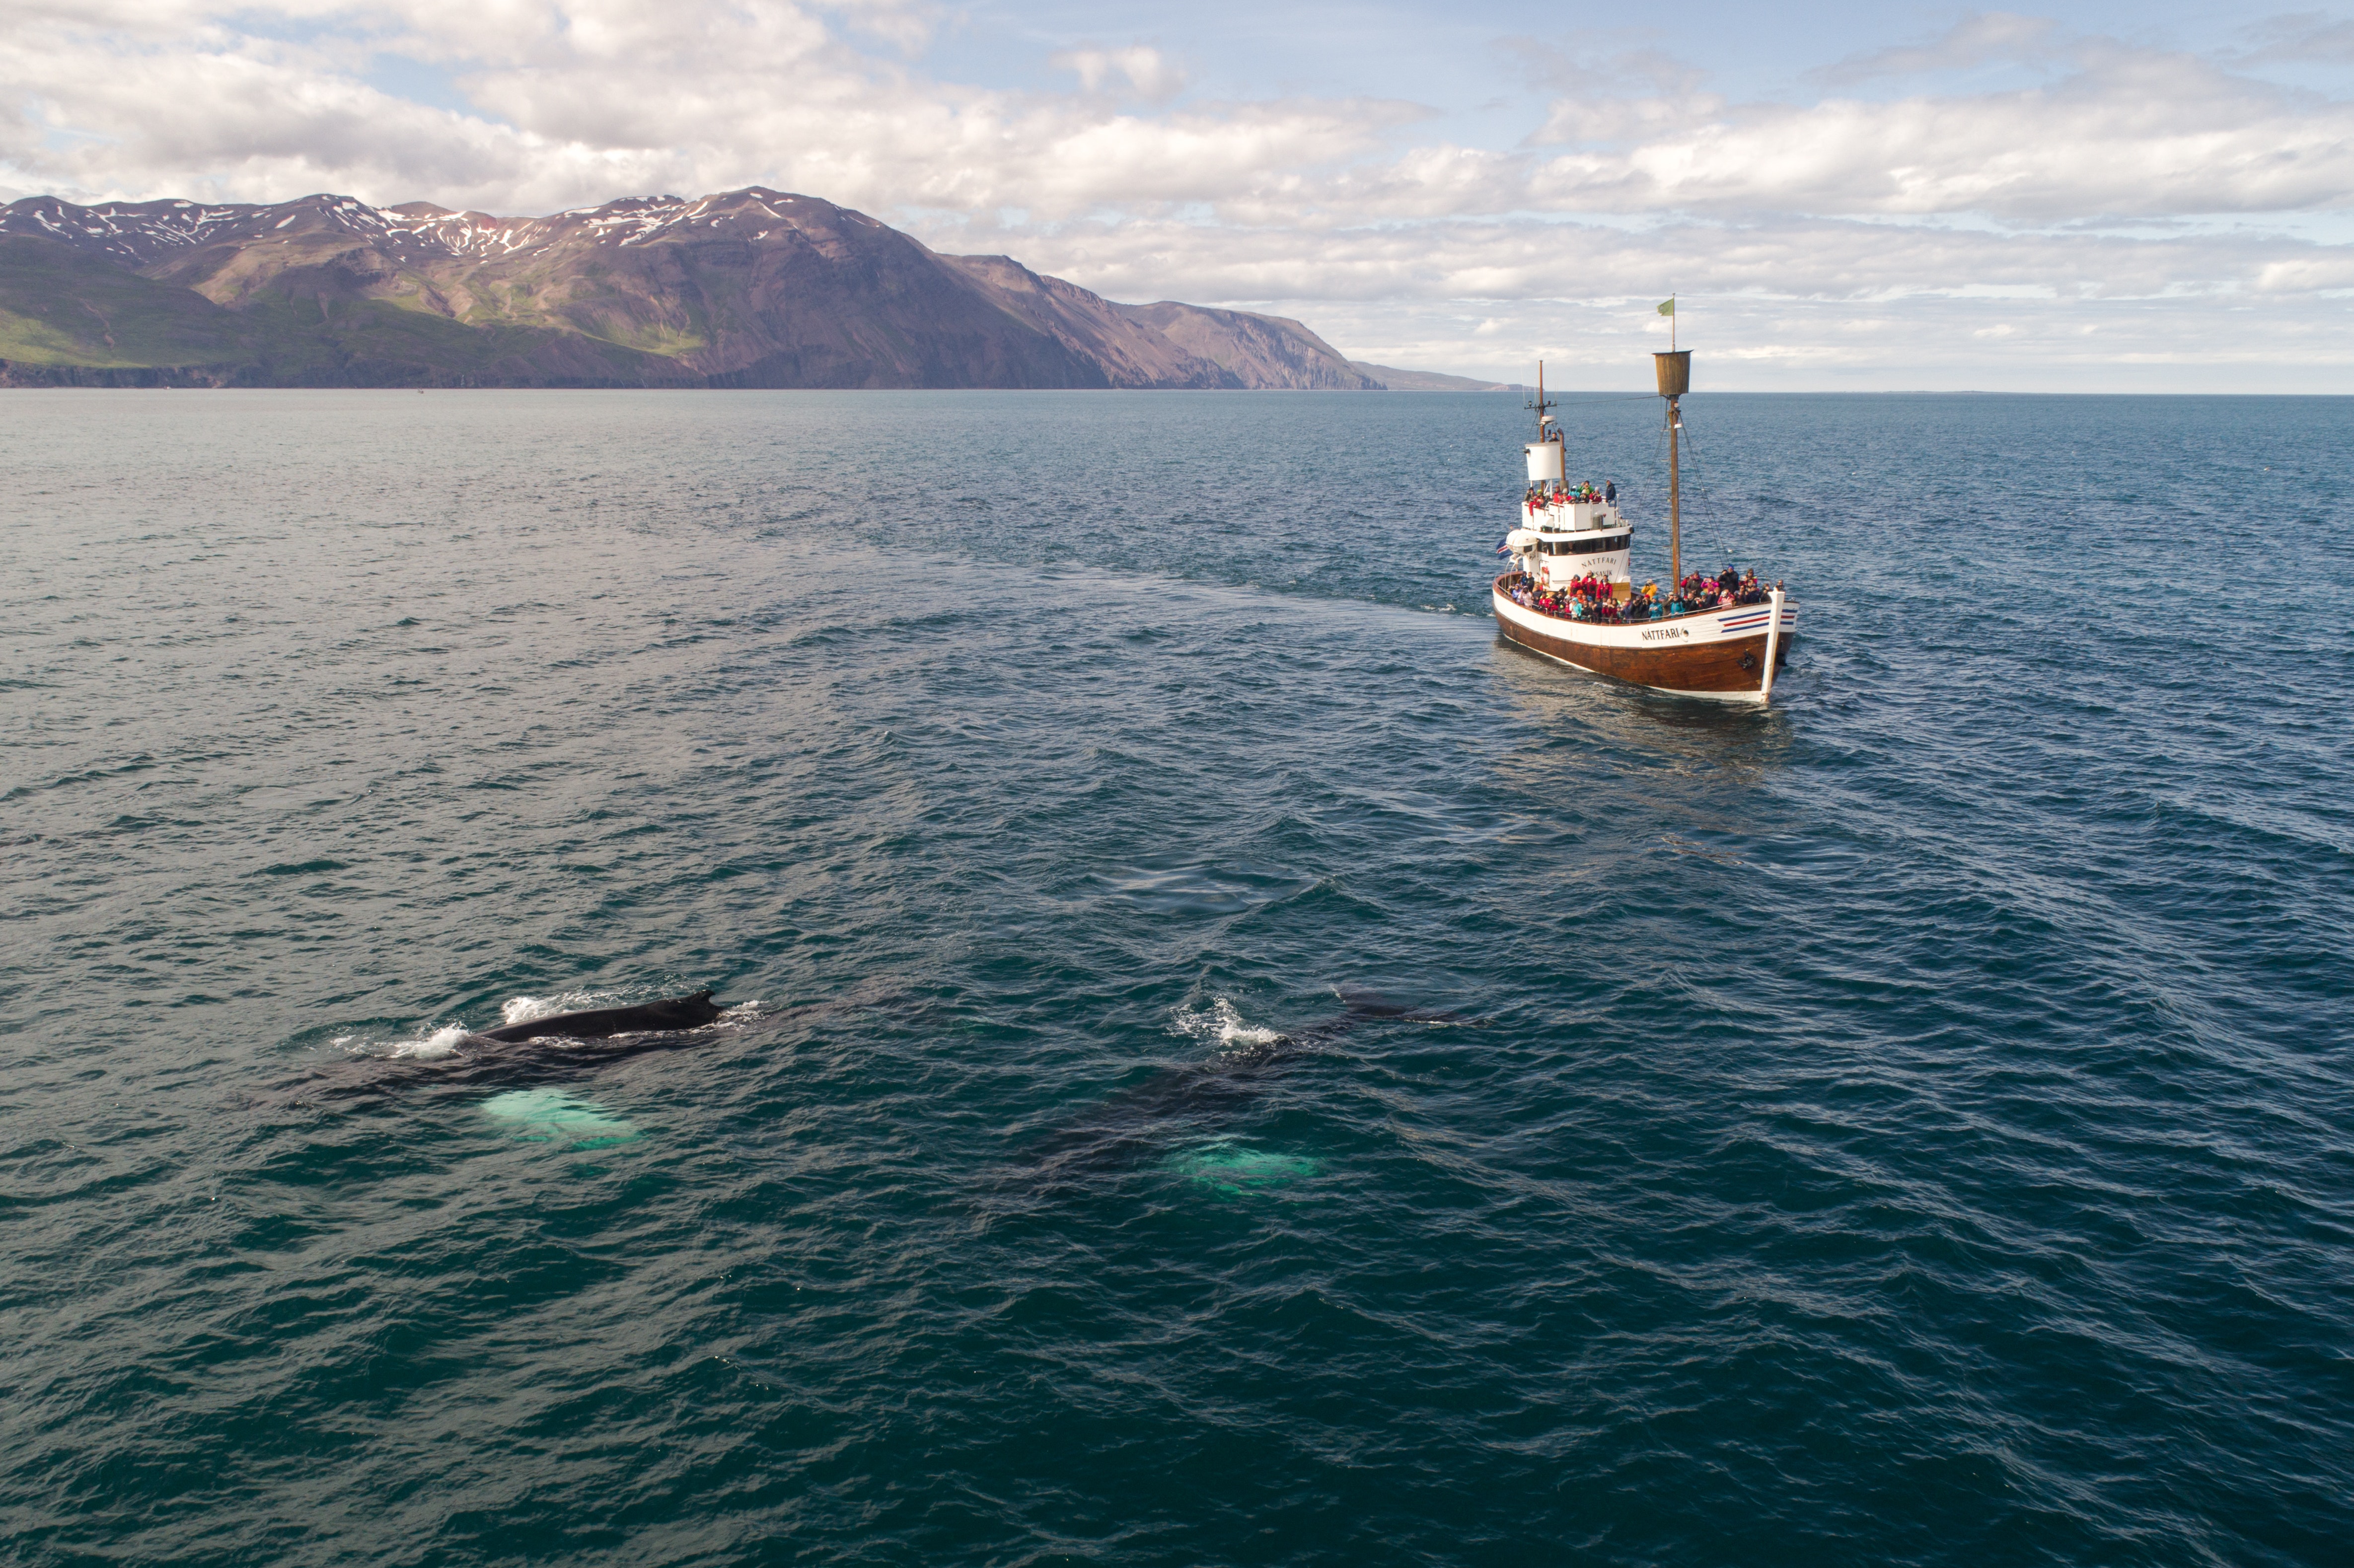 Katla whale watching
Things to do in Reykjavik

